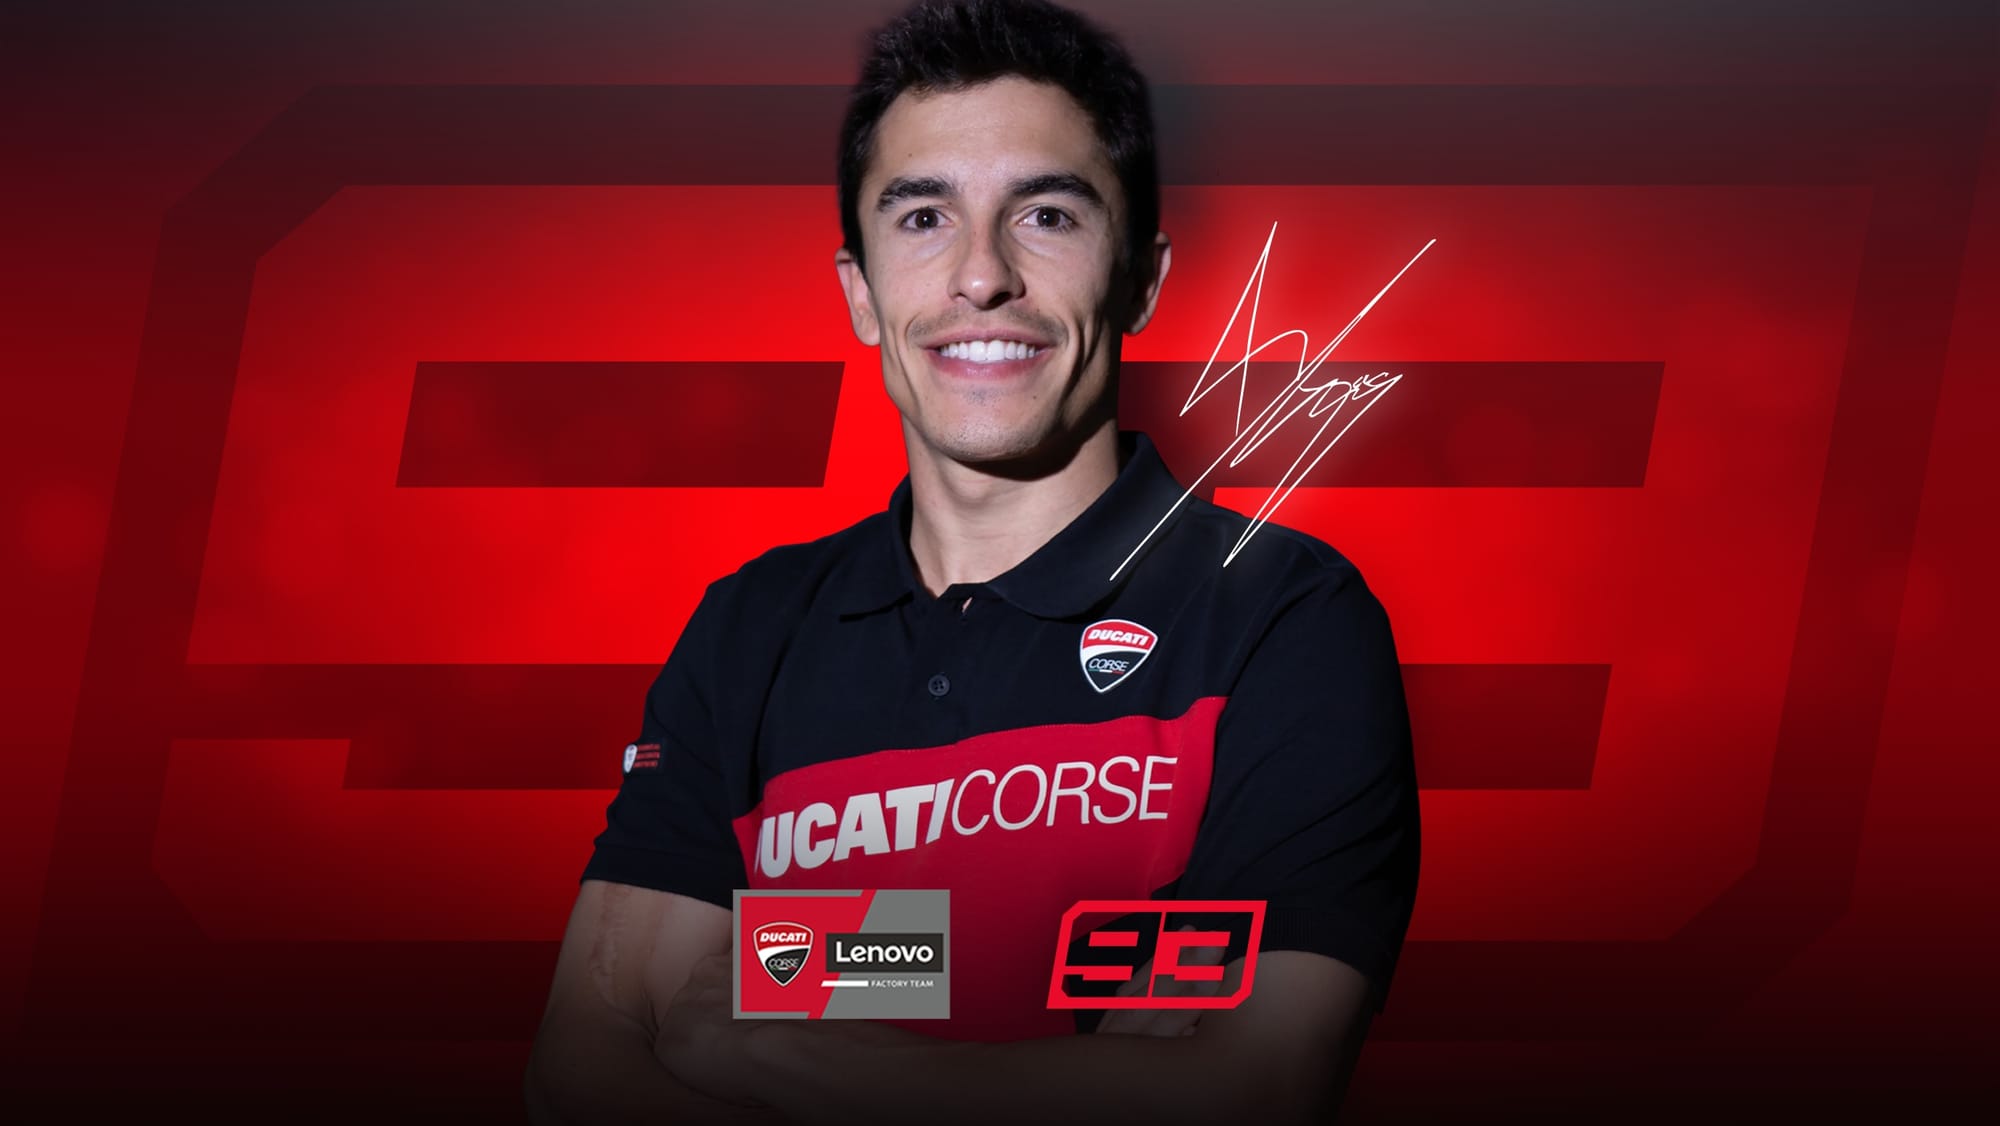 BREAKING : Marquez dans l’équipe d’usine Ducati jusqu’en 2026